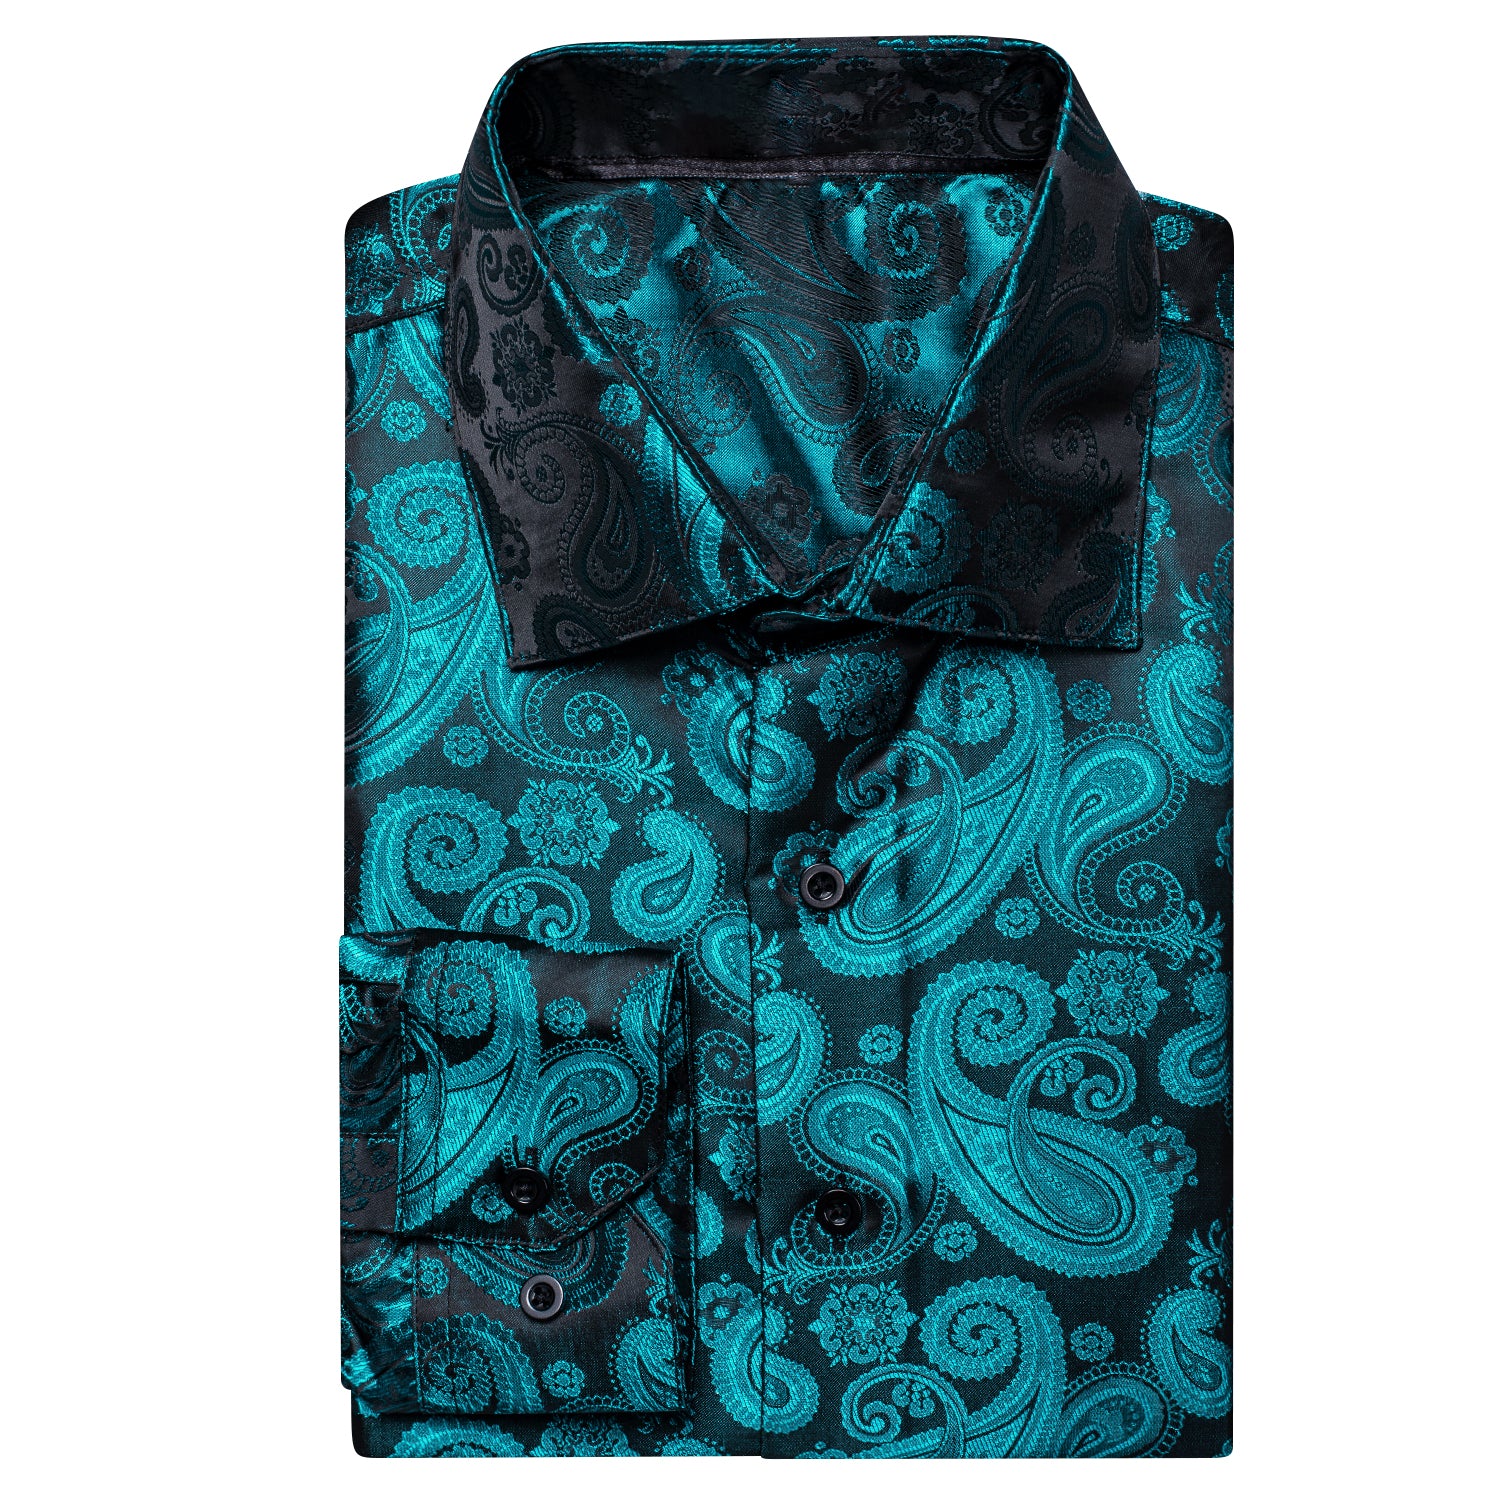  Blue Black Paisley Silk Men's Long Sleeve Shirt Casual